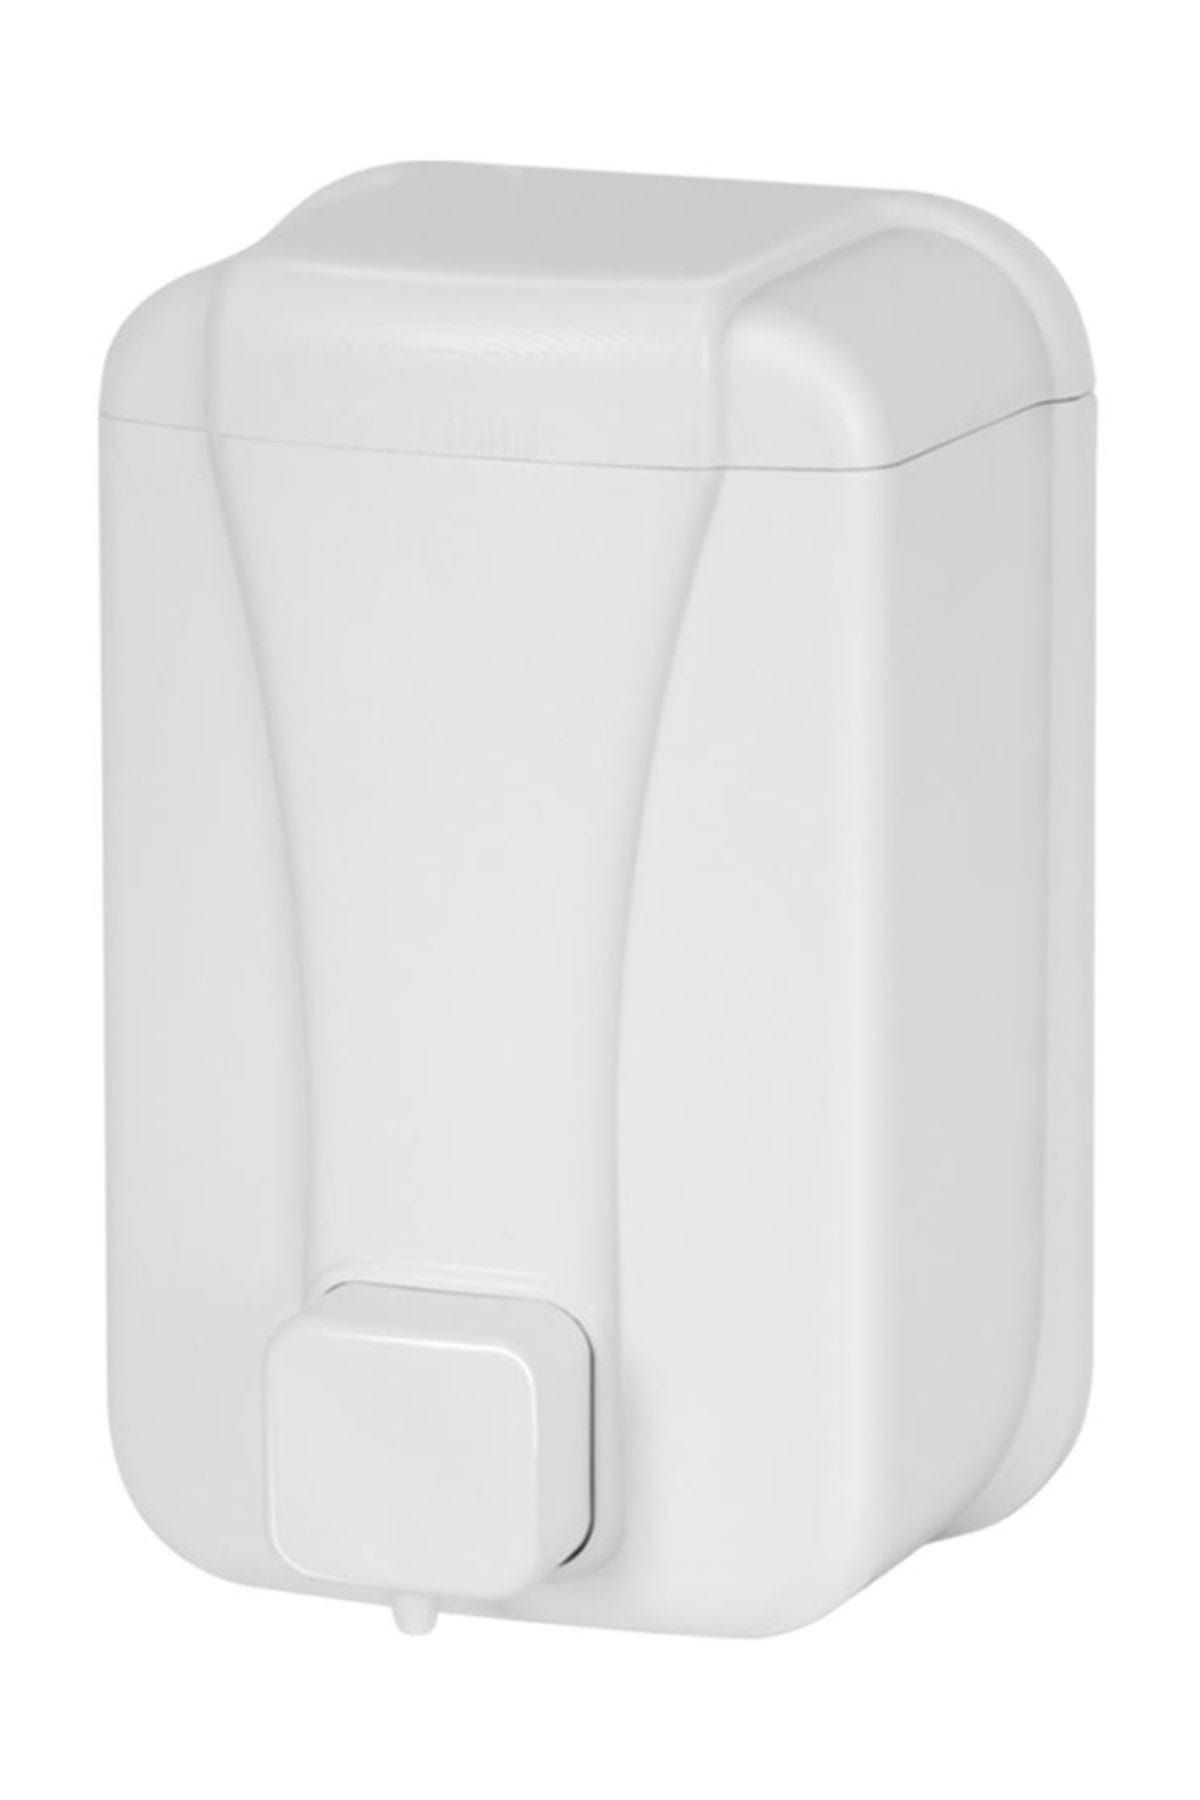 Alper Banyo 3424-0 Standart Köpük Sabun Dispenseri 1000 Cc. Beyaz